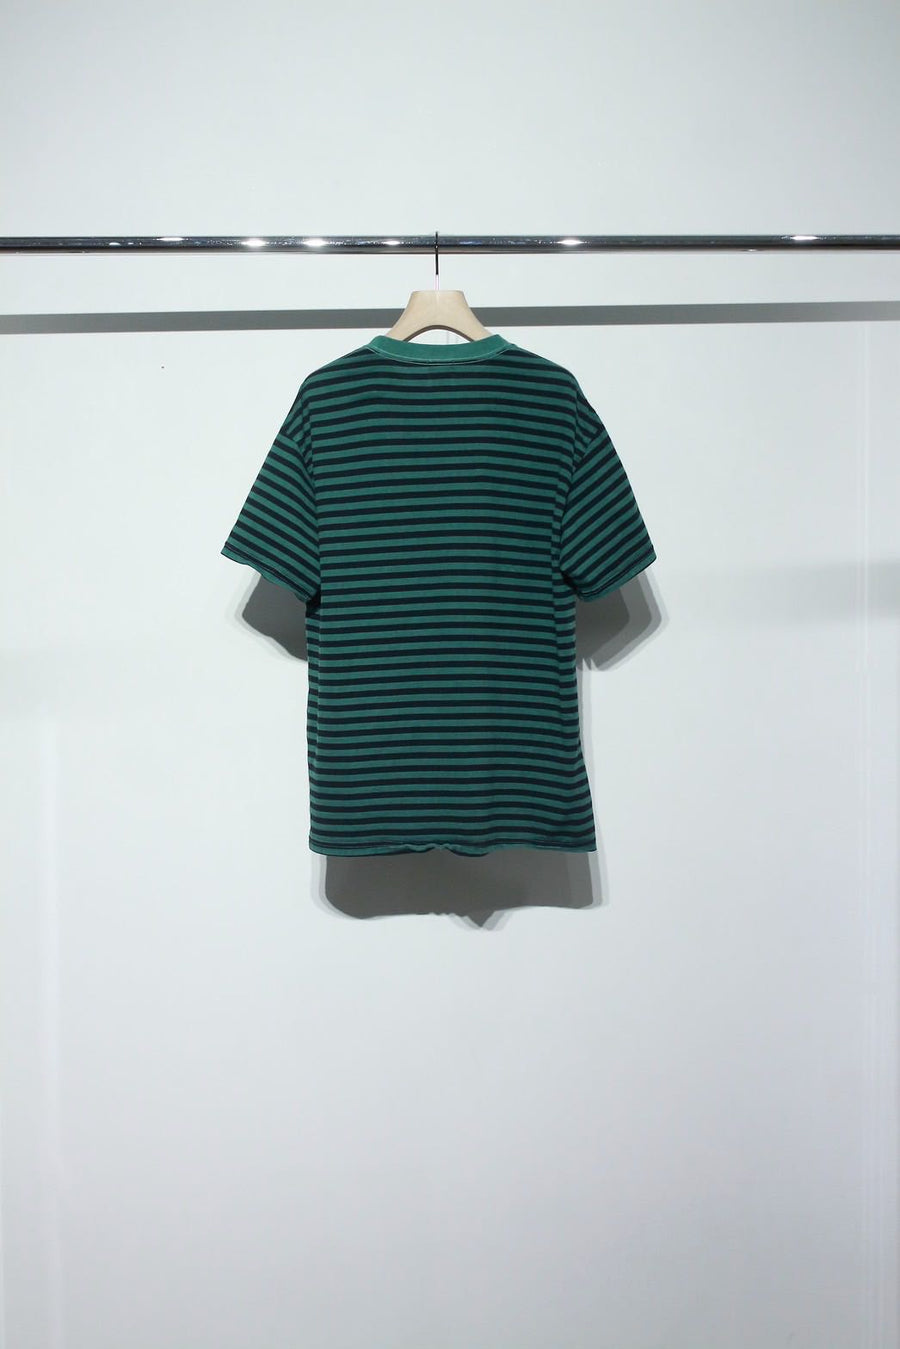 soe  Overdyed Border T Shirt(GREEN / BLACK)